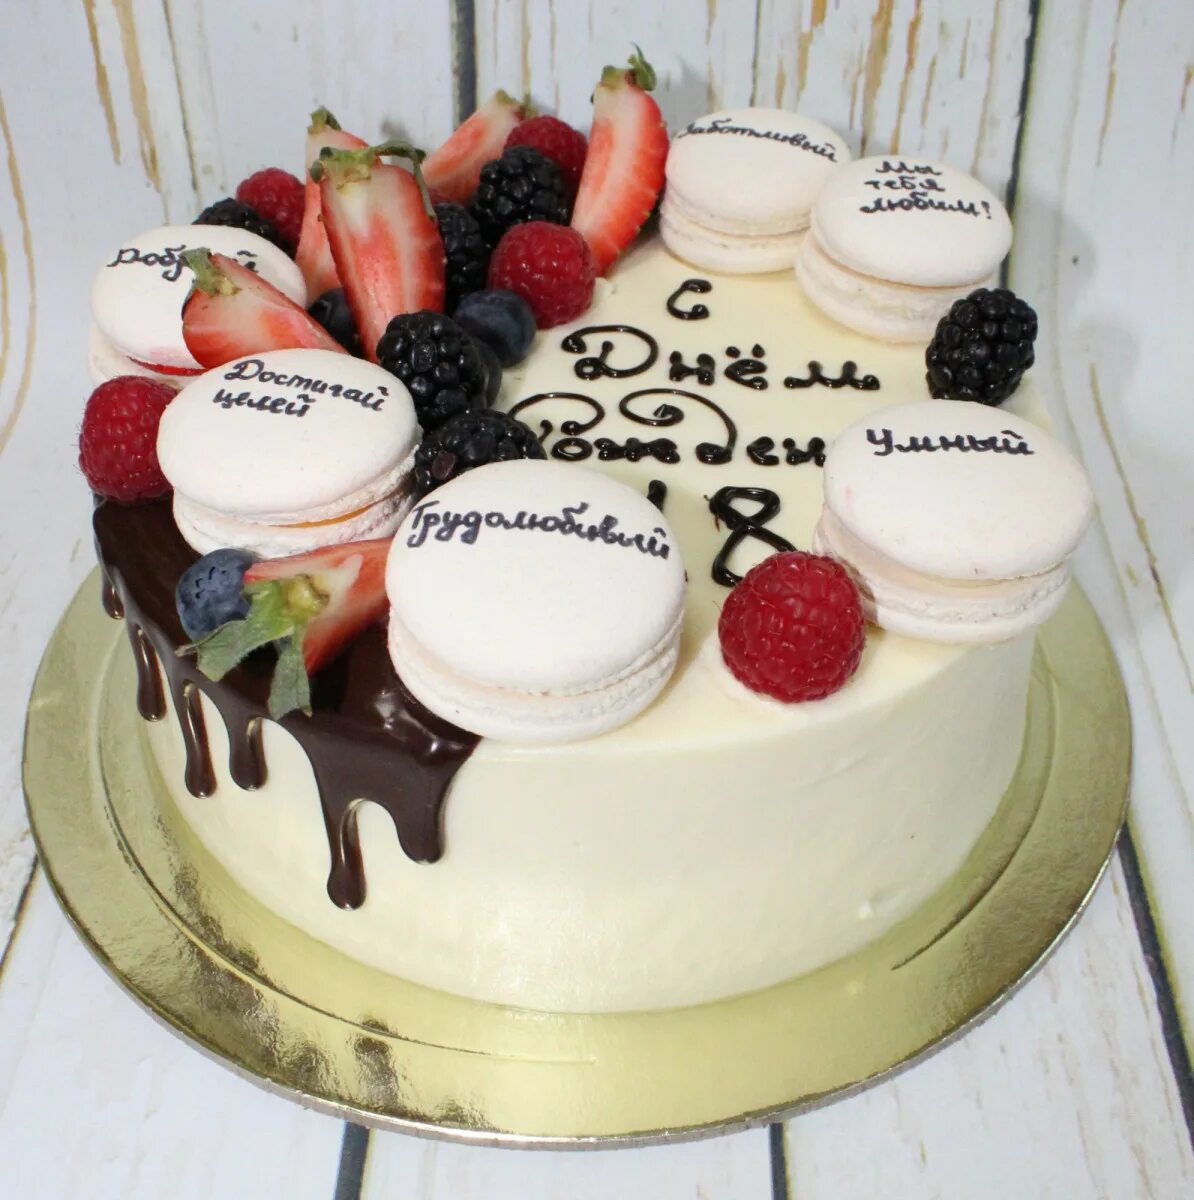 Надписи на торт с днем рождения девушке. Торт с днем рождения!. Красивые торты на день рождения. Красивый тортик для подруги. Торт подруге на день рождения.